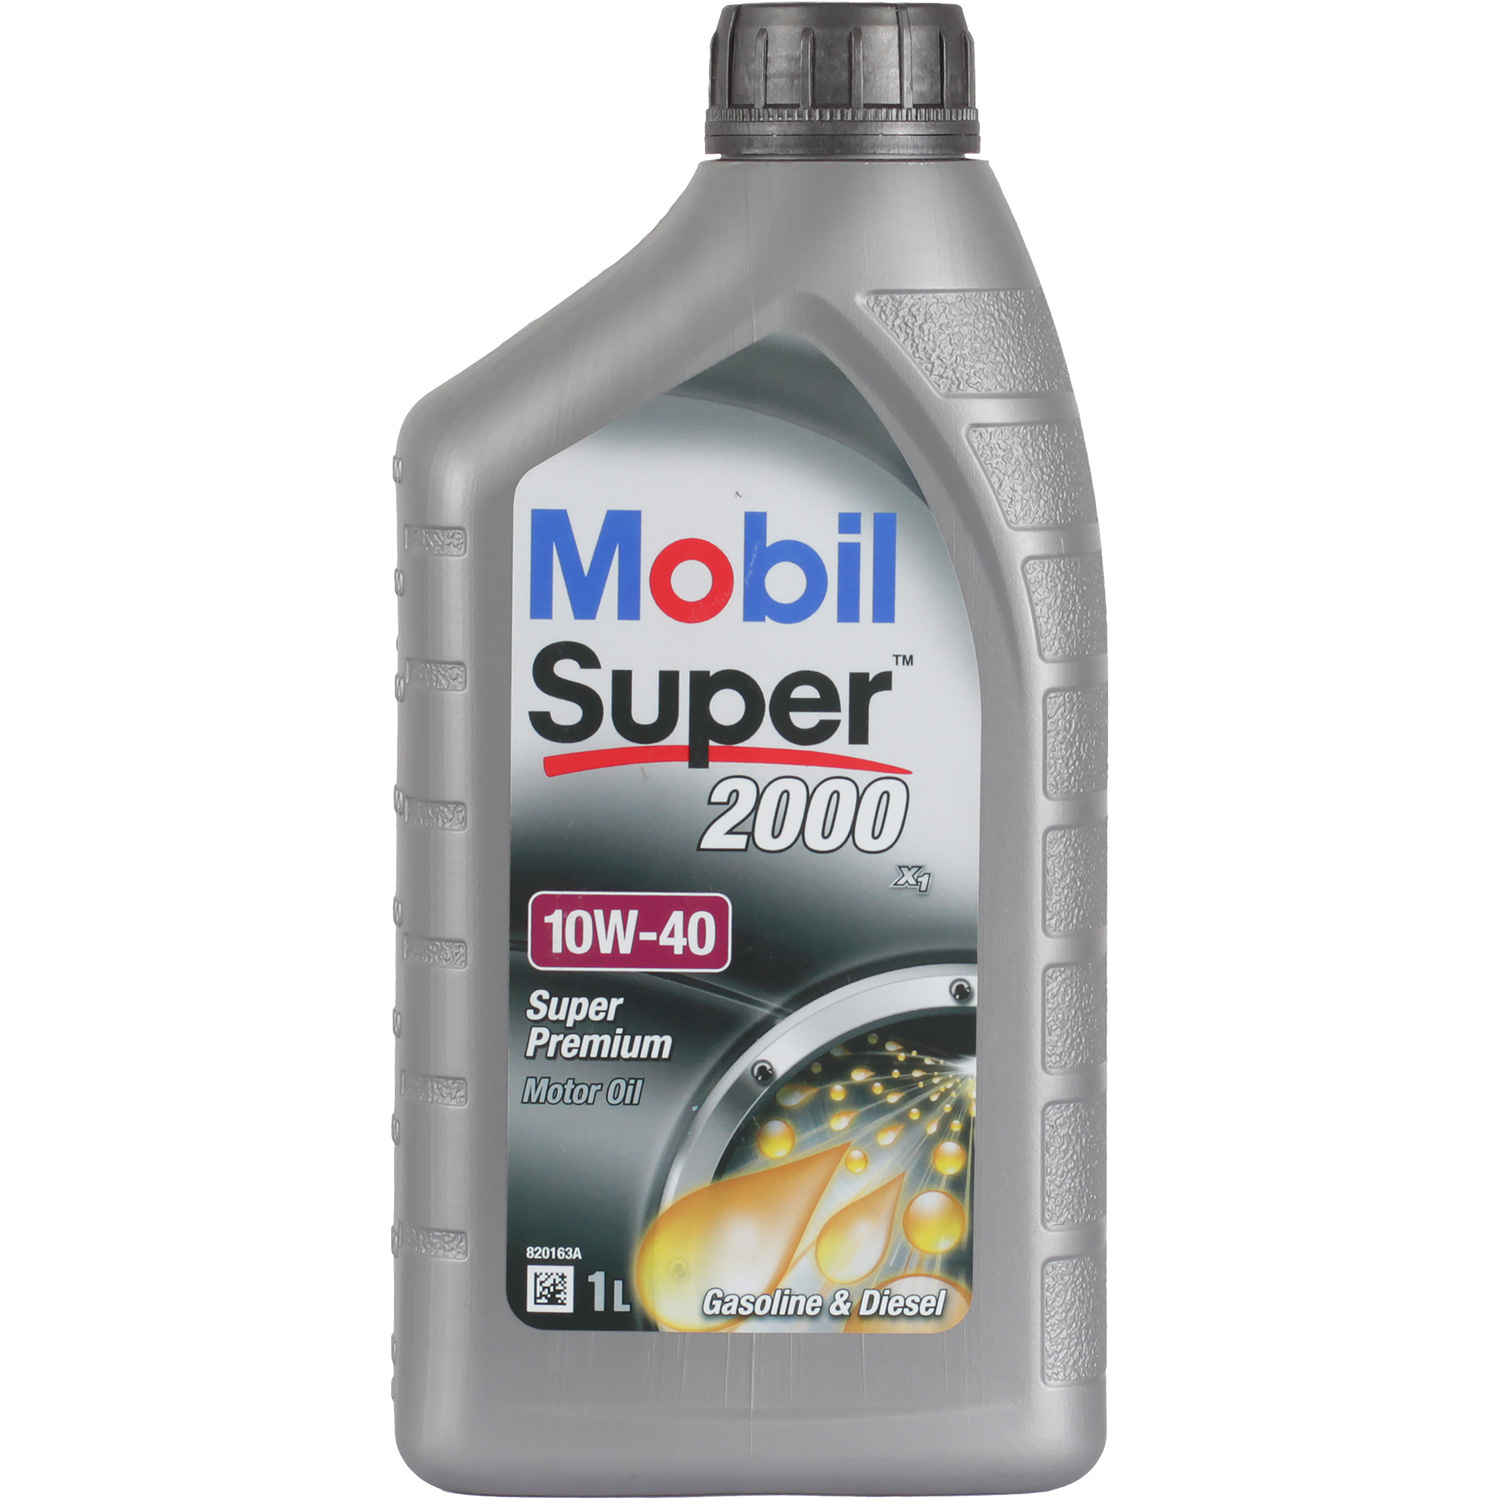 Mobil Моторное масло Mobil Super 2000 X1 10W-40, 1 л моторное масло mobil 1 fs 0w 40 4 л